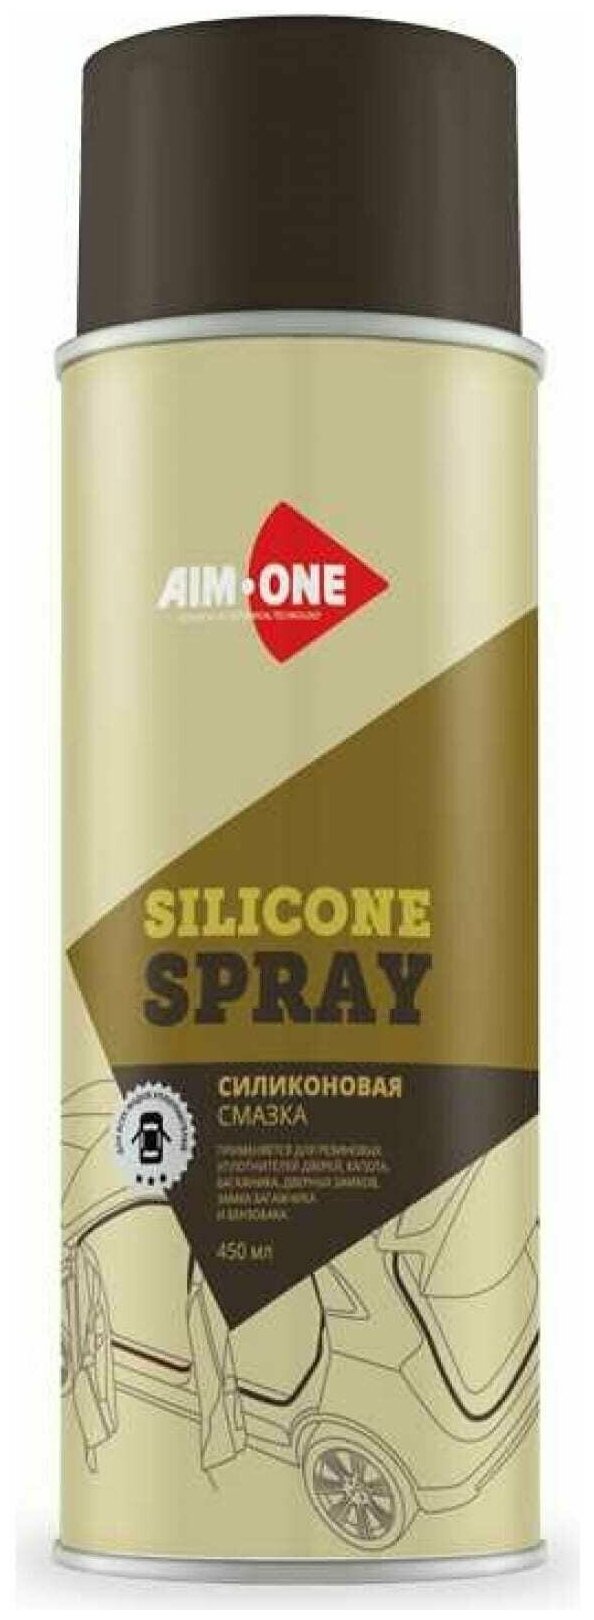 Смазка силиконовая Silicone spray 450мл аэрозоль AIM-ONE арт. AD-200